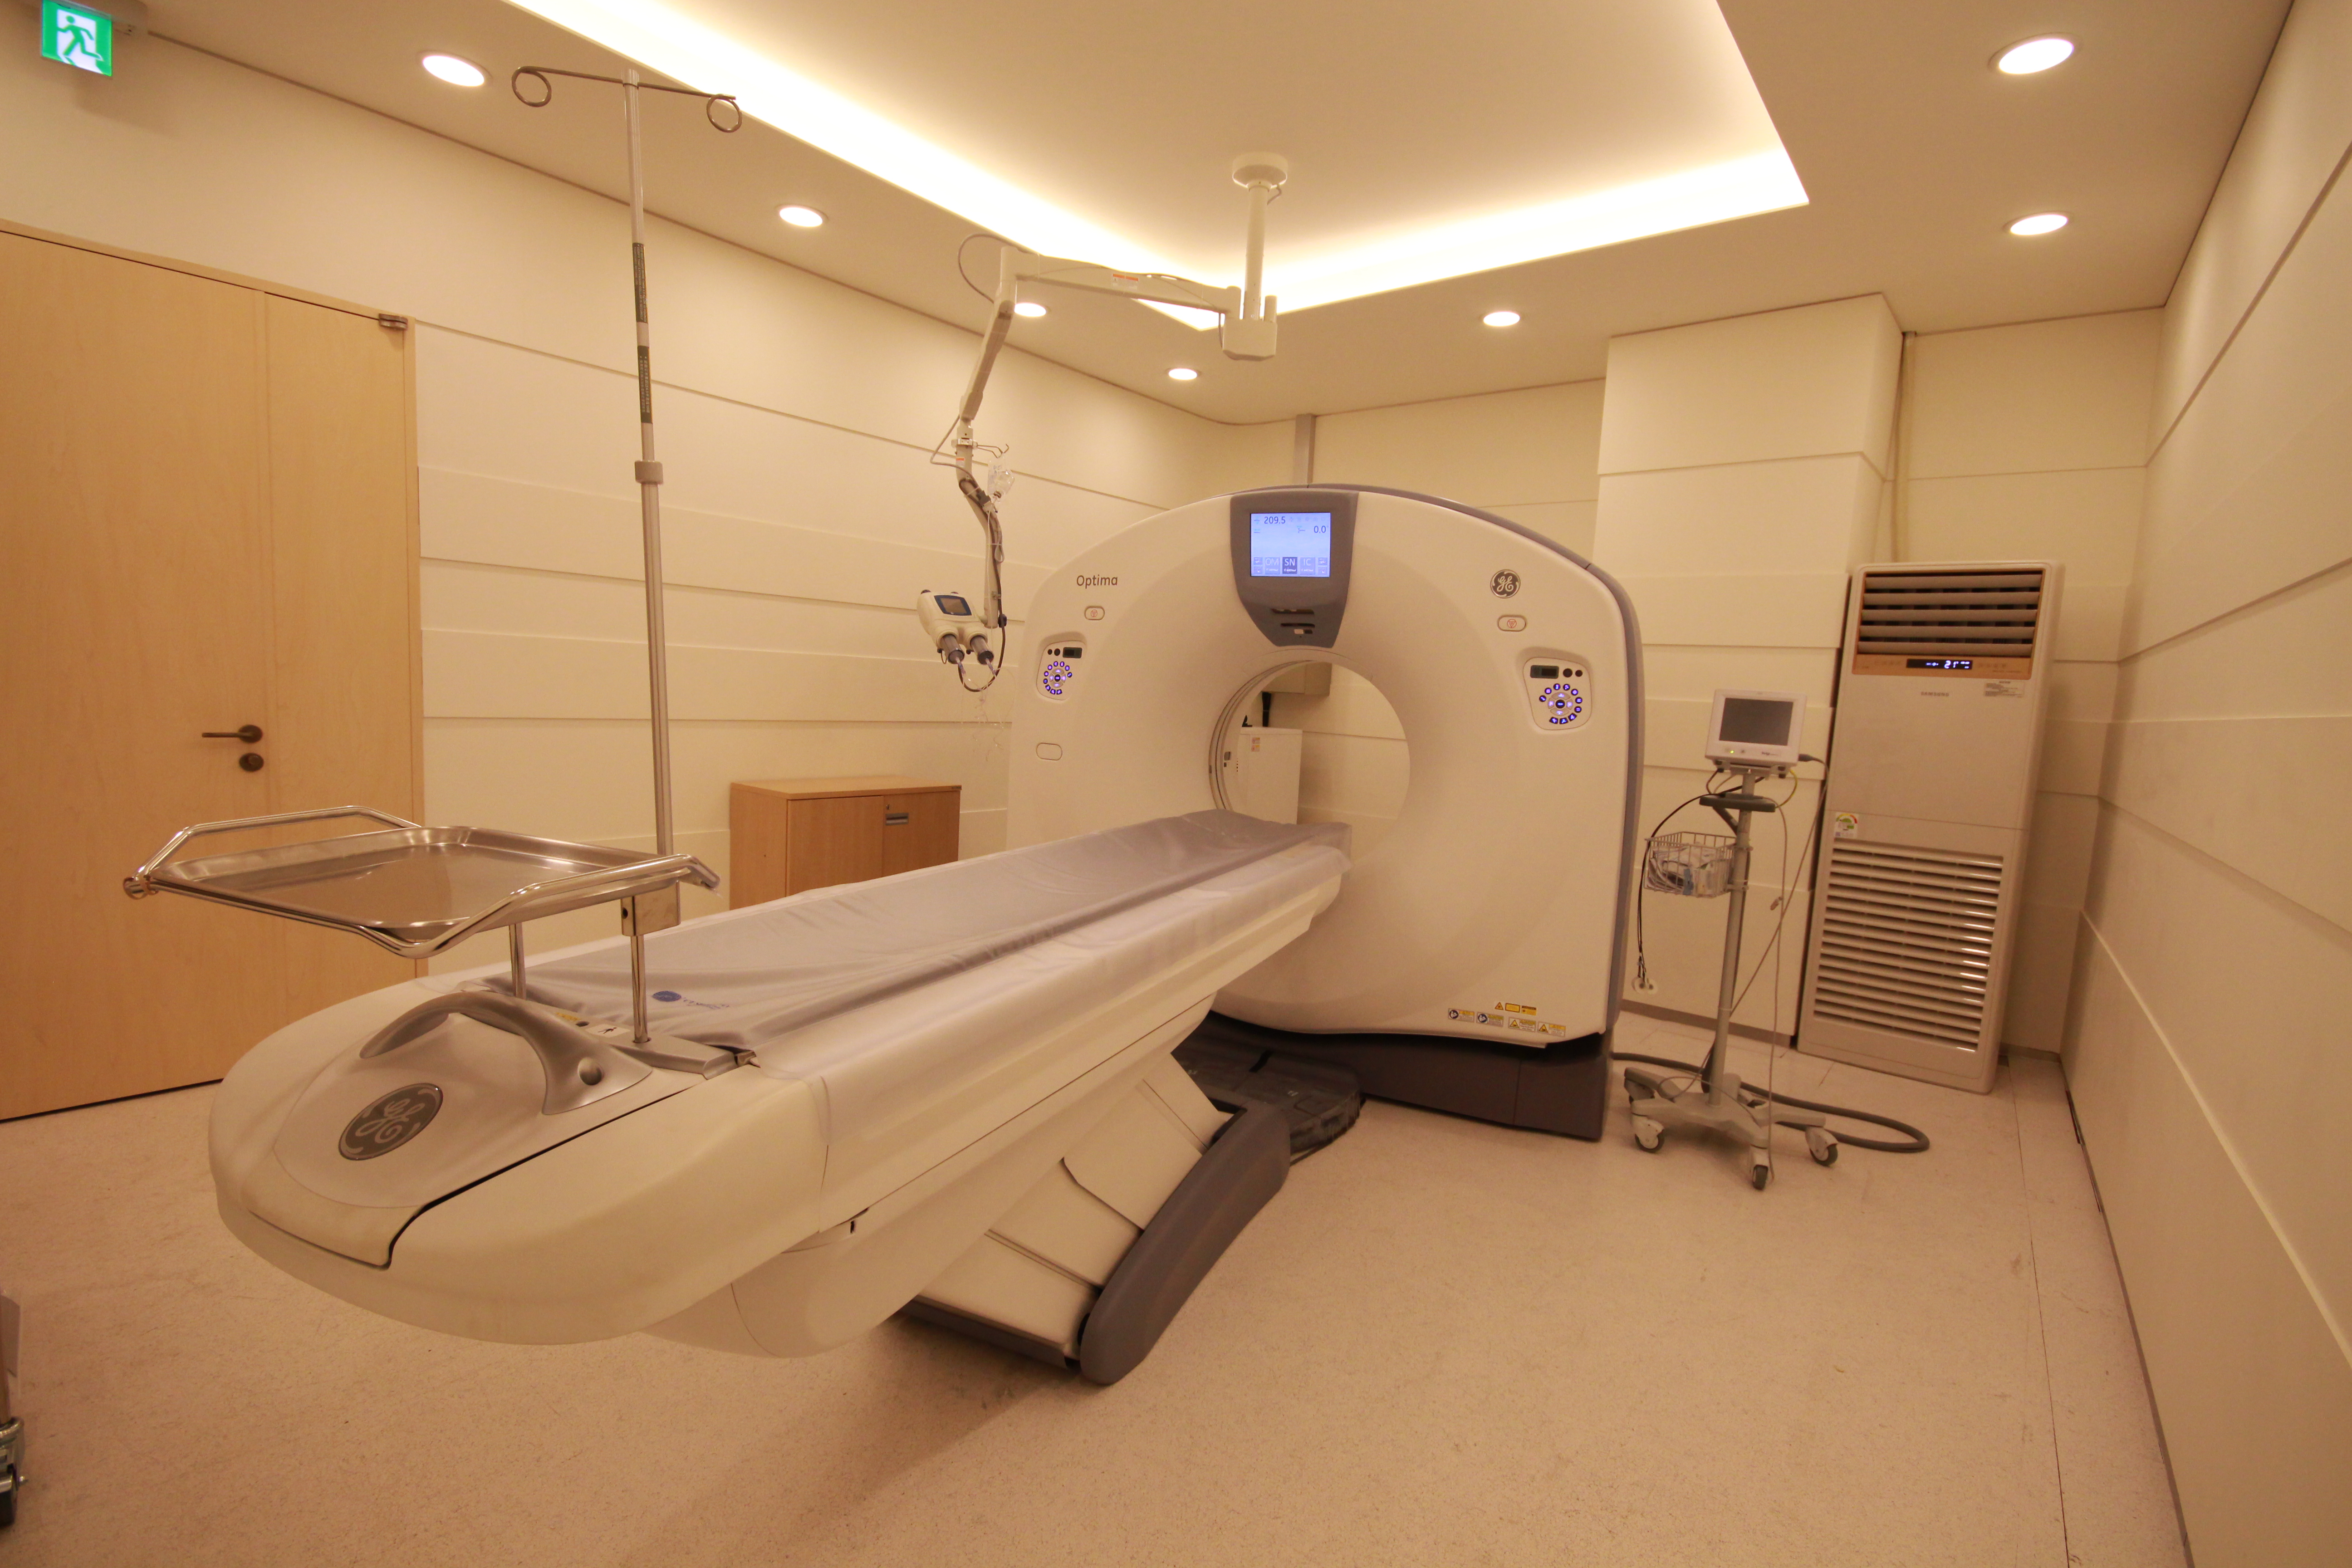 PET-CT 촬영실